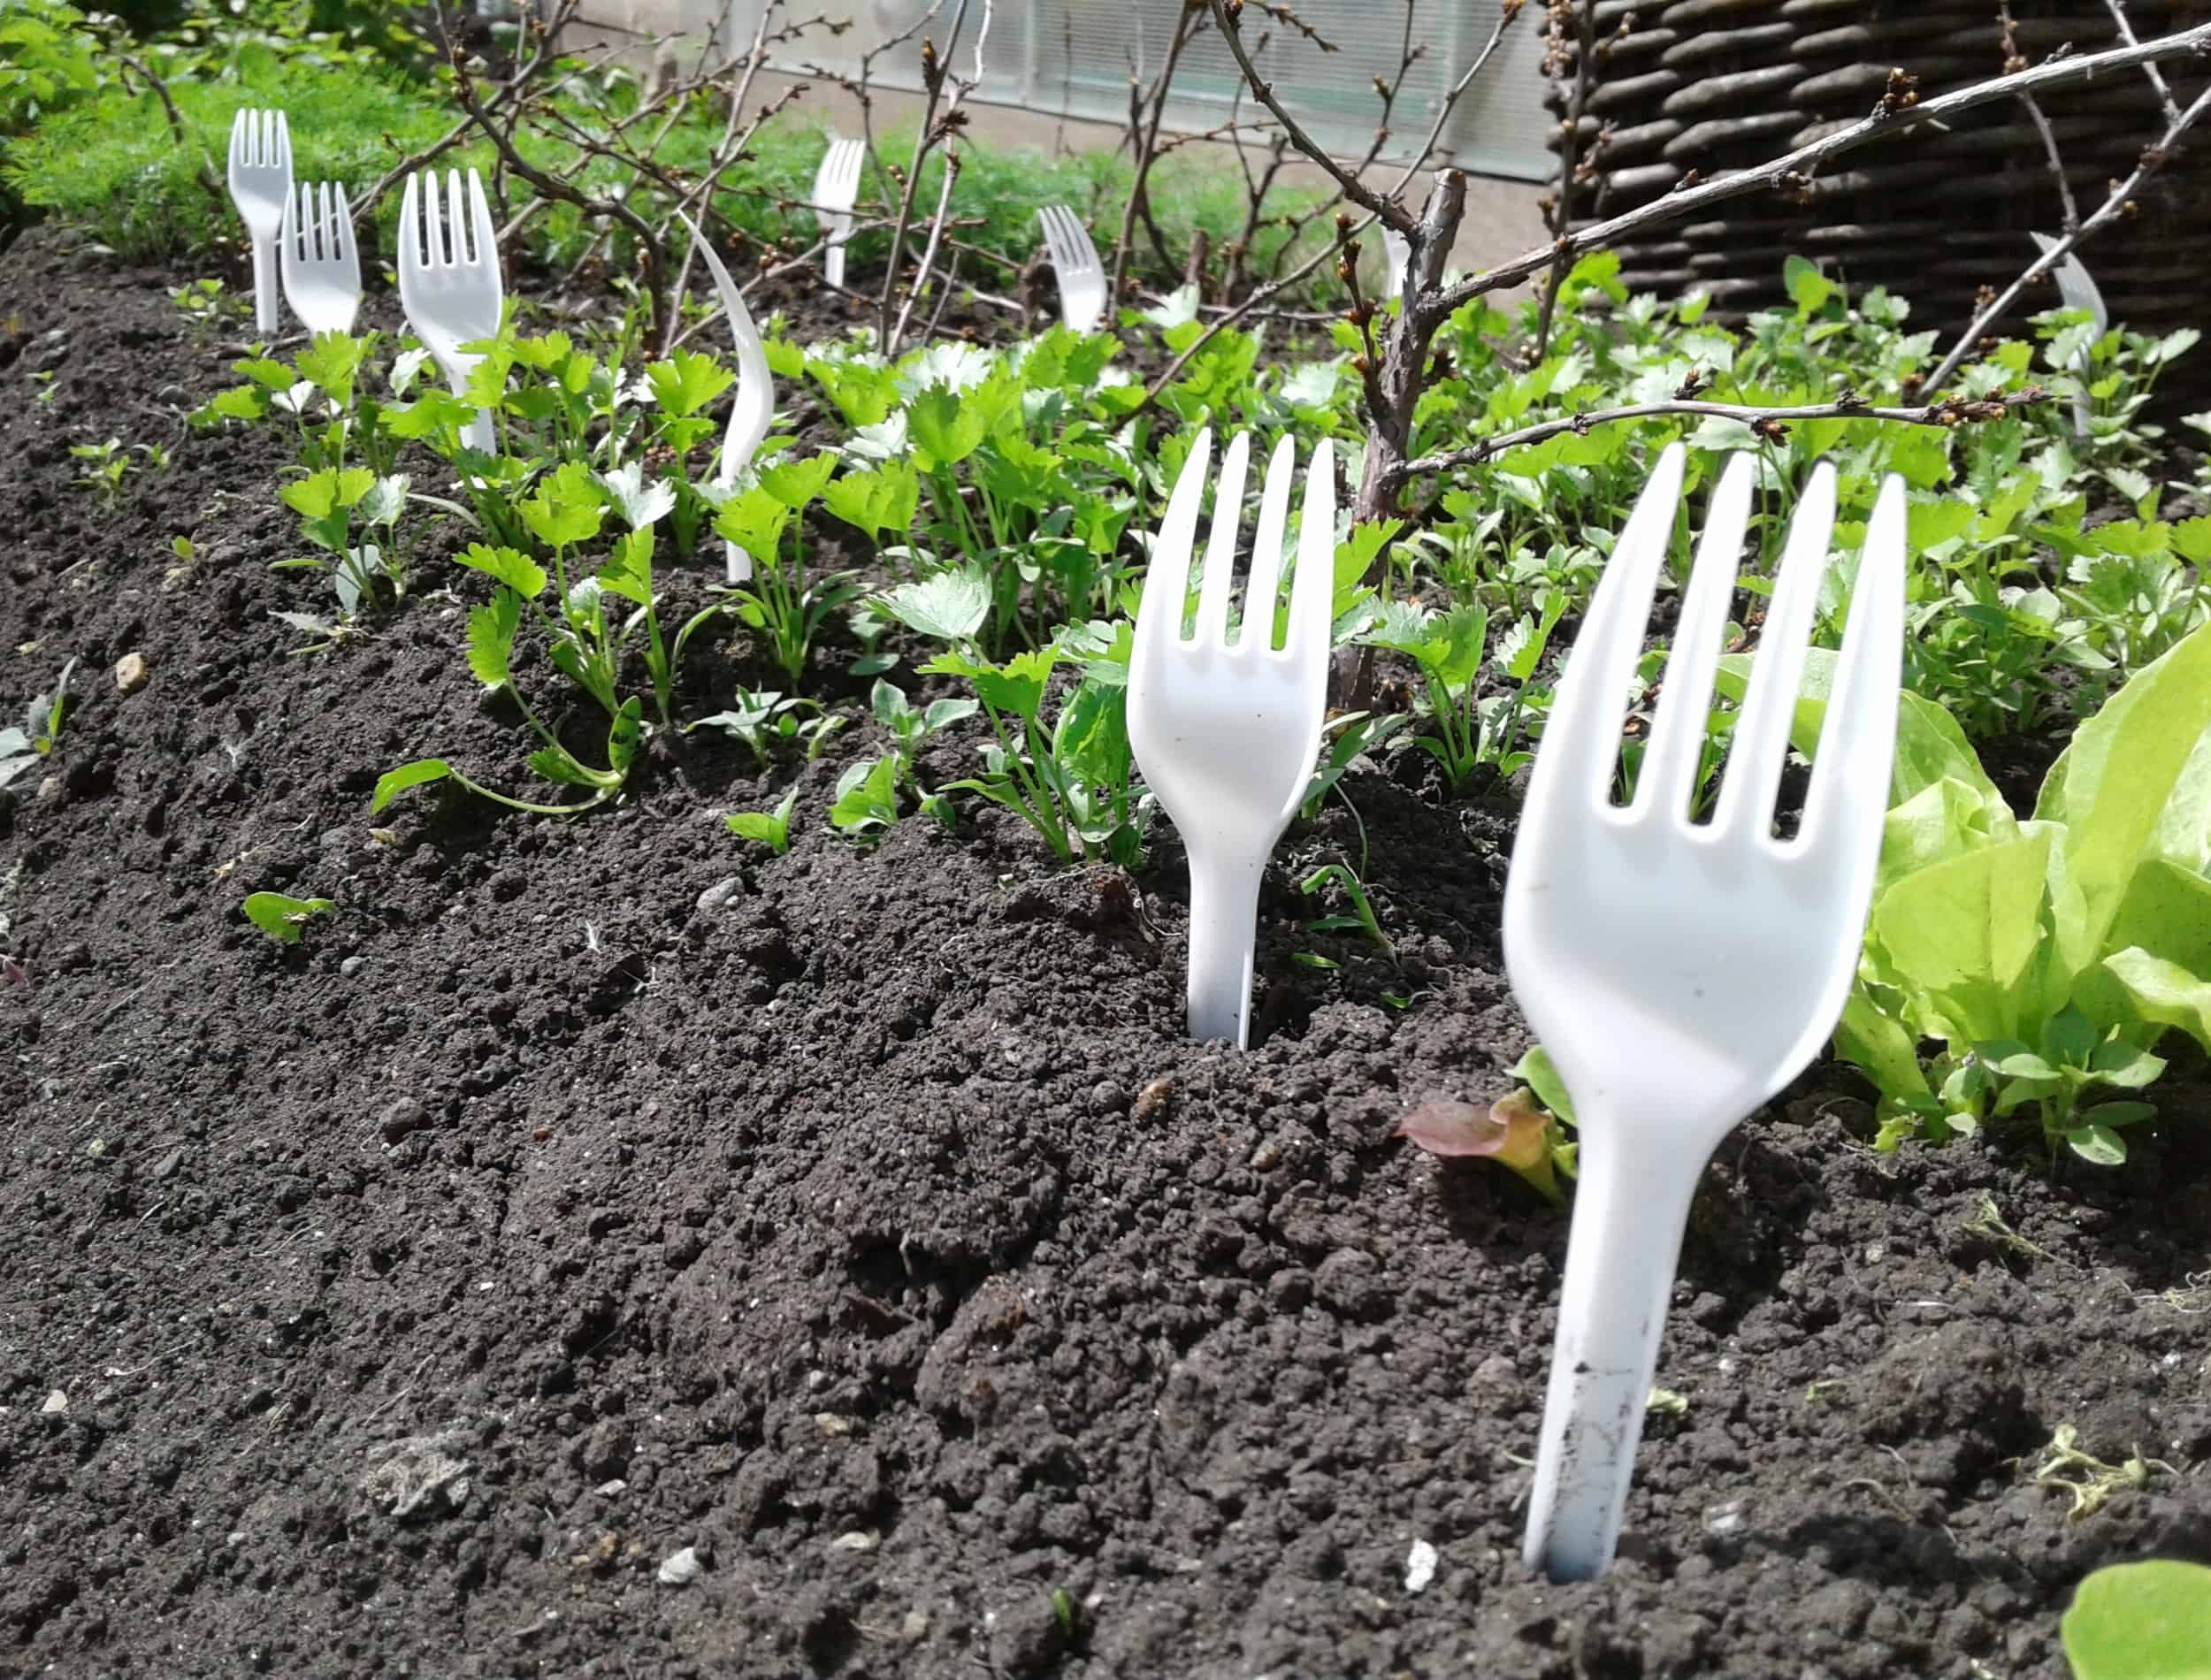 Plastic forks in the garden